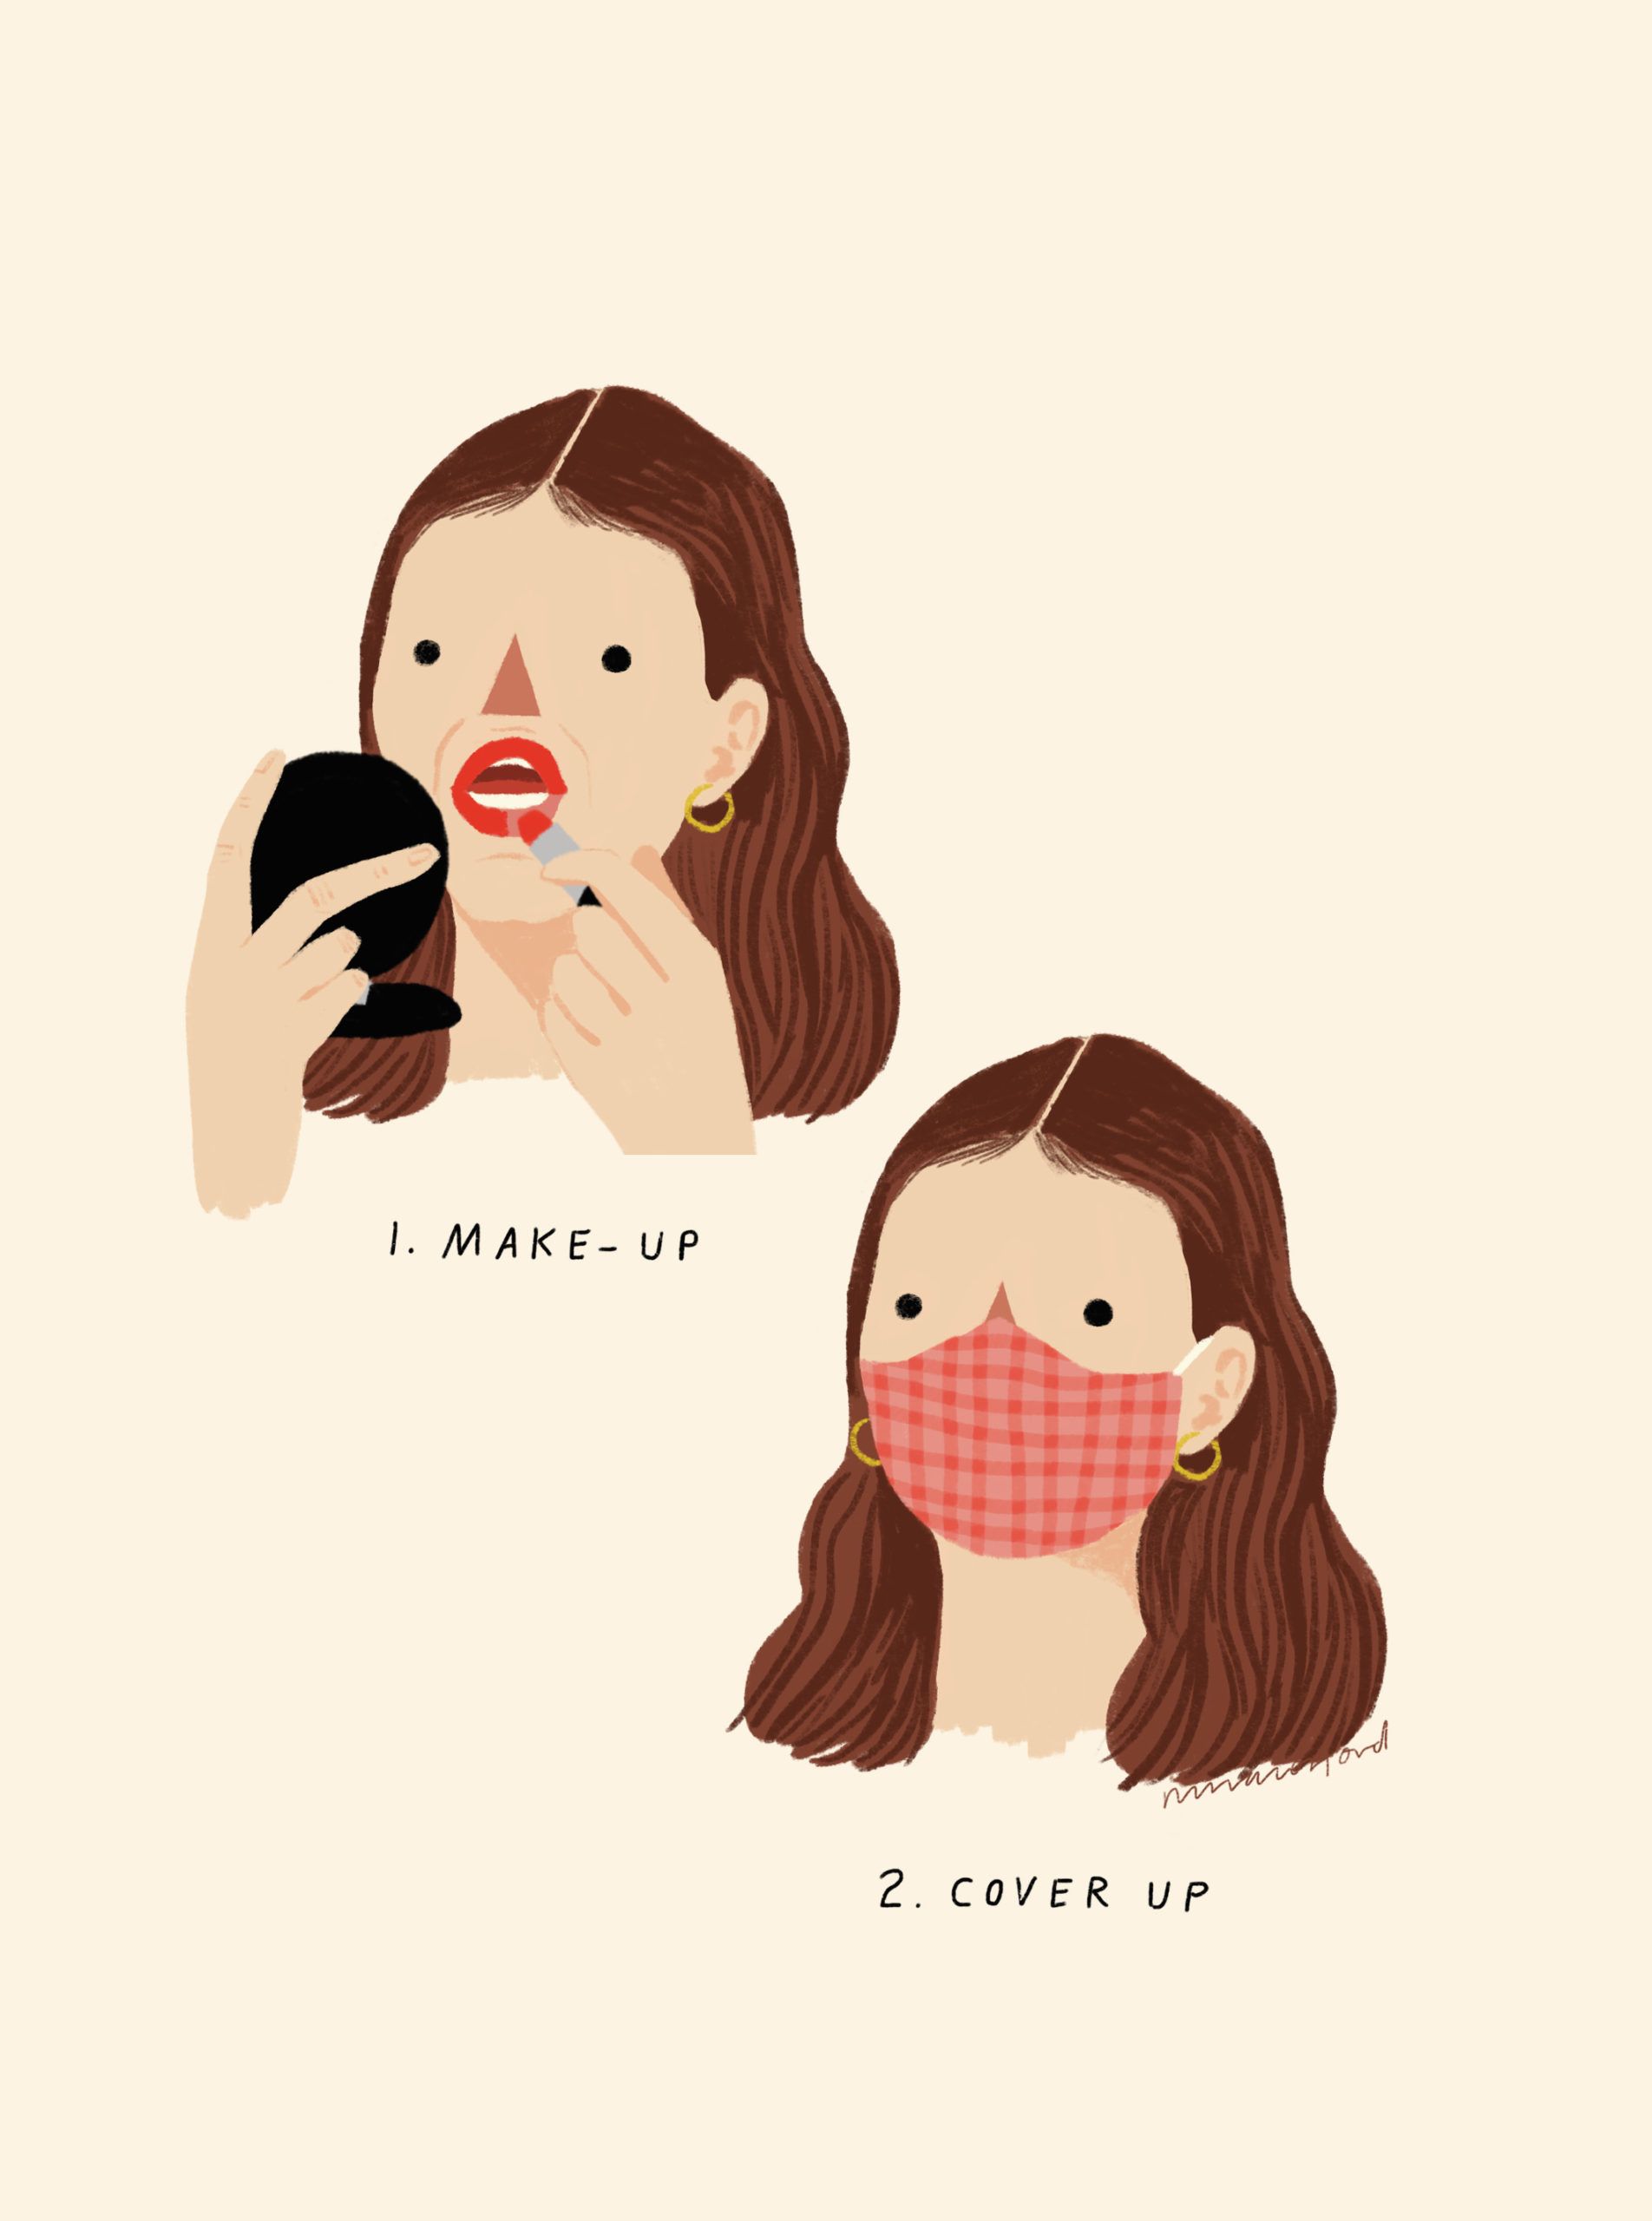 Nina Cosford Illustration - make up mask on